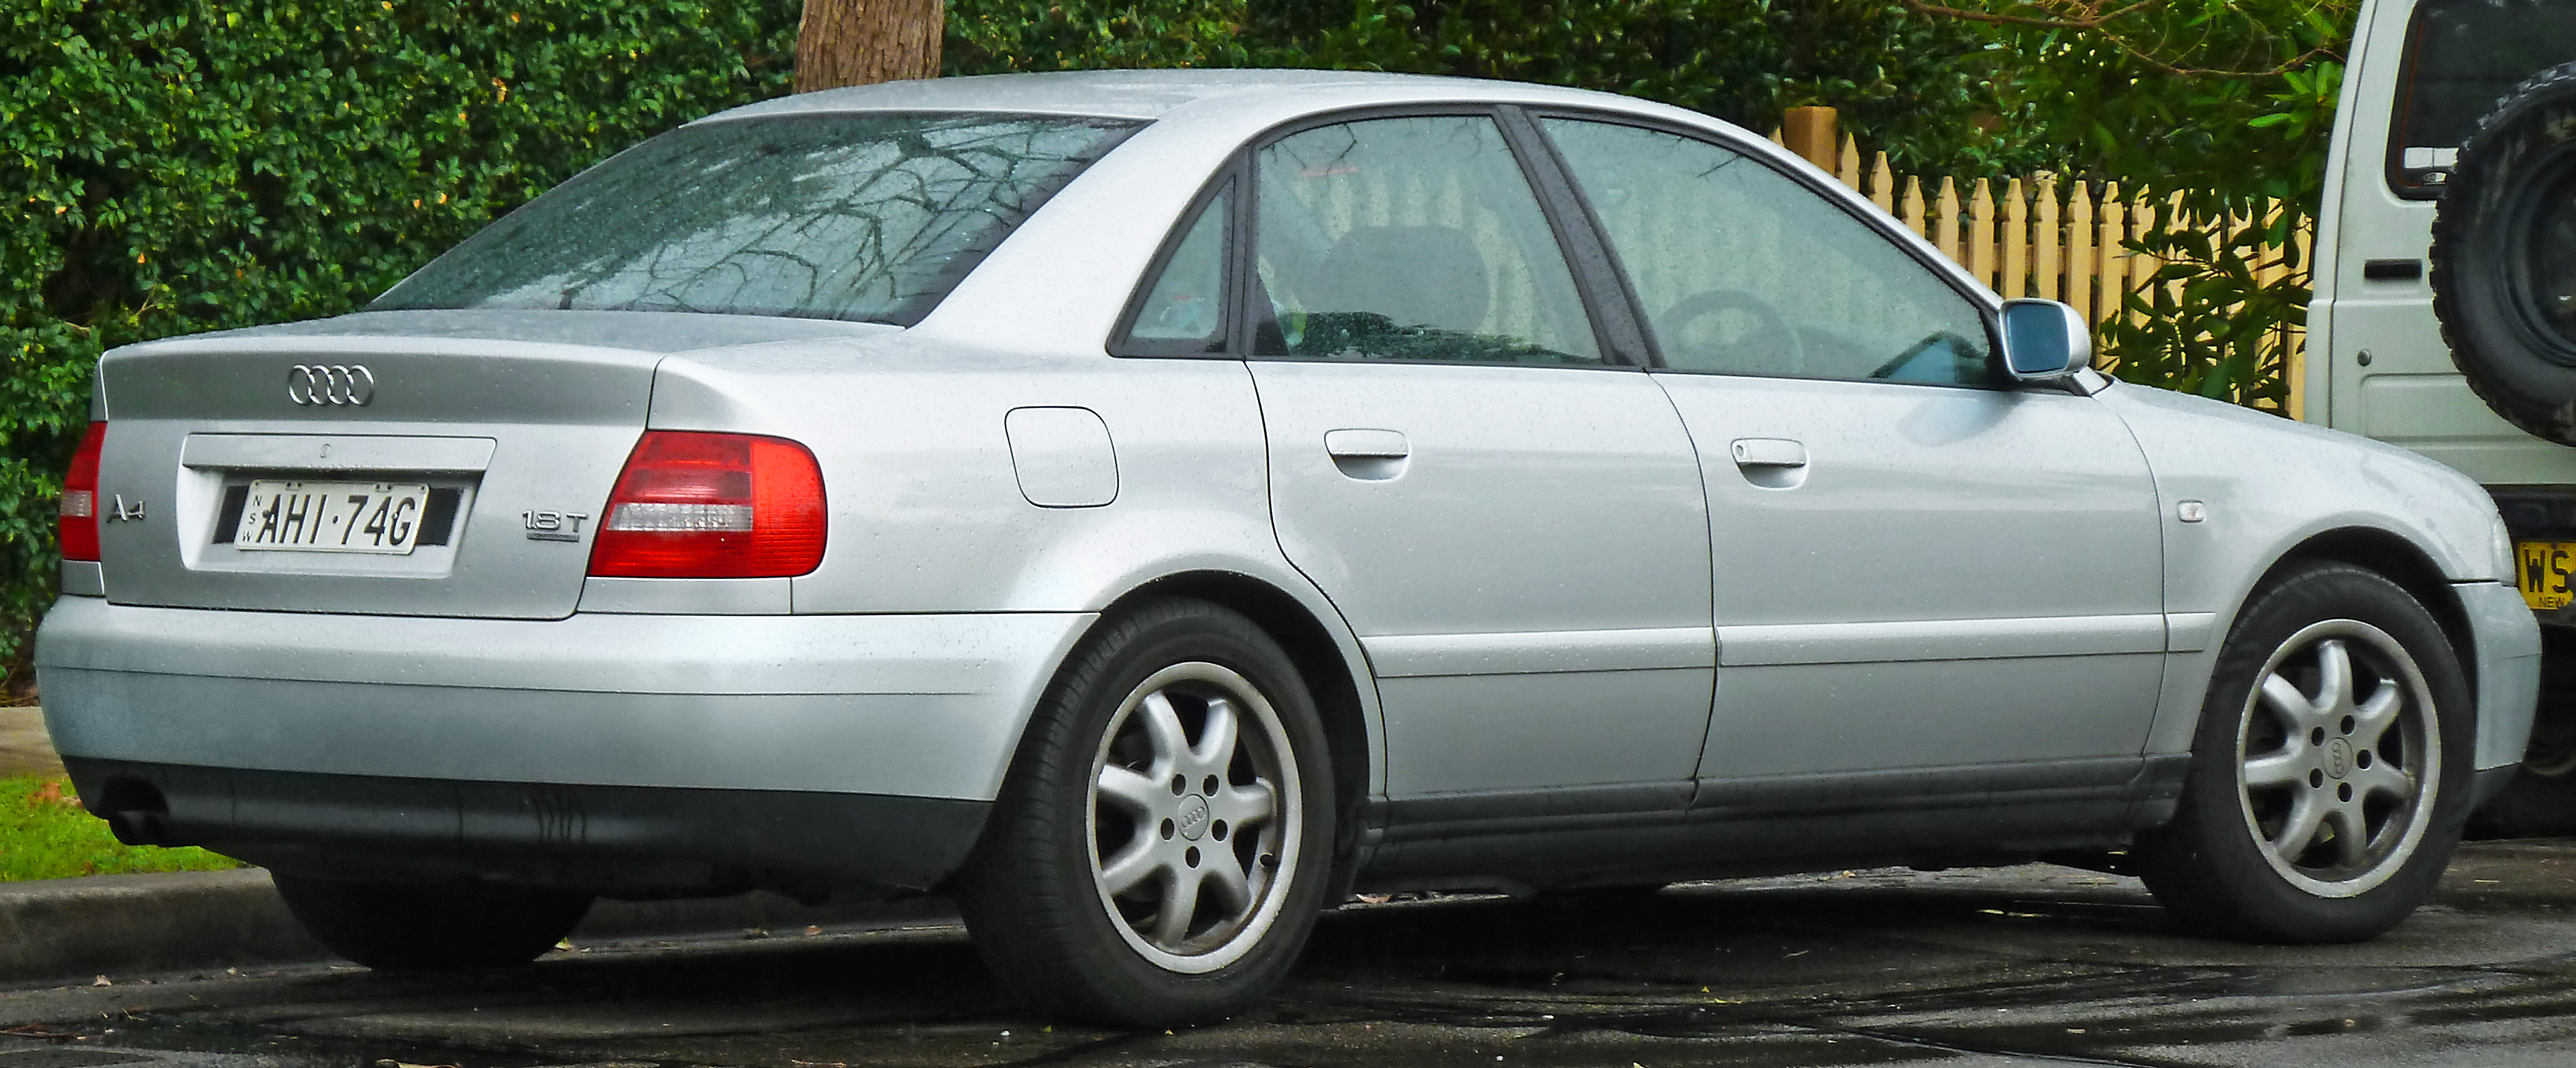 File:1999-2001 Audi A4 (8D) 1.8 T quattro sedan (2011-08-17) 02.jpg -  Wikimedia Commons